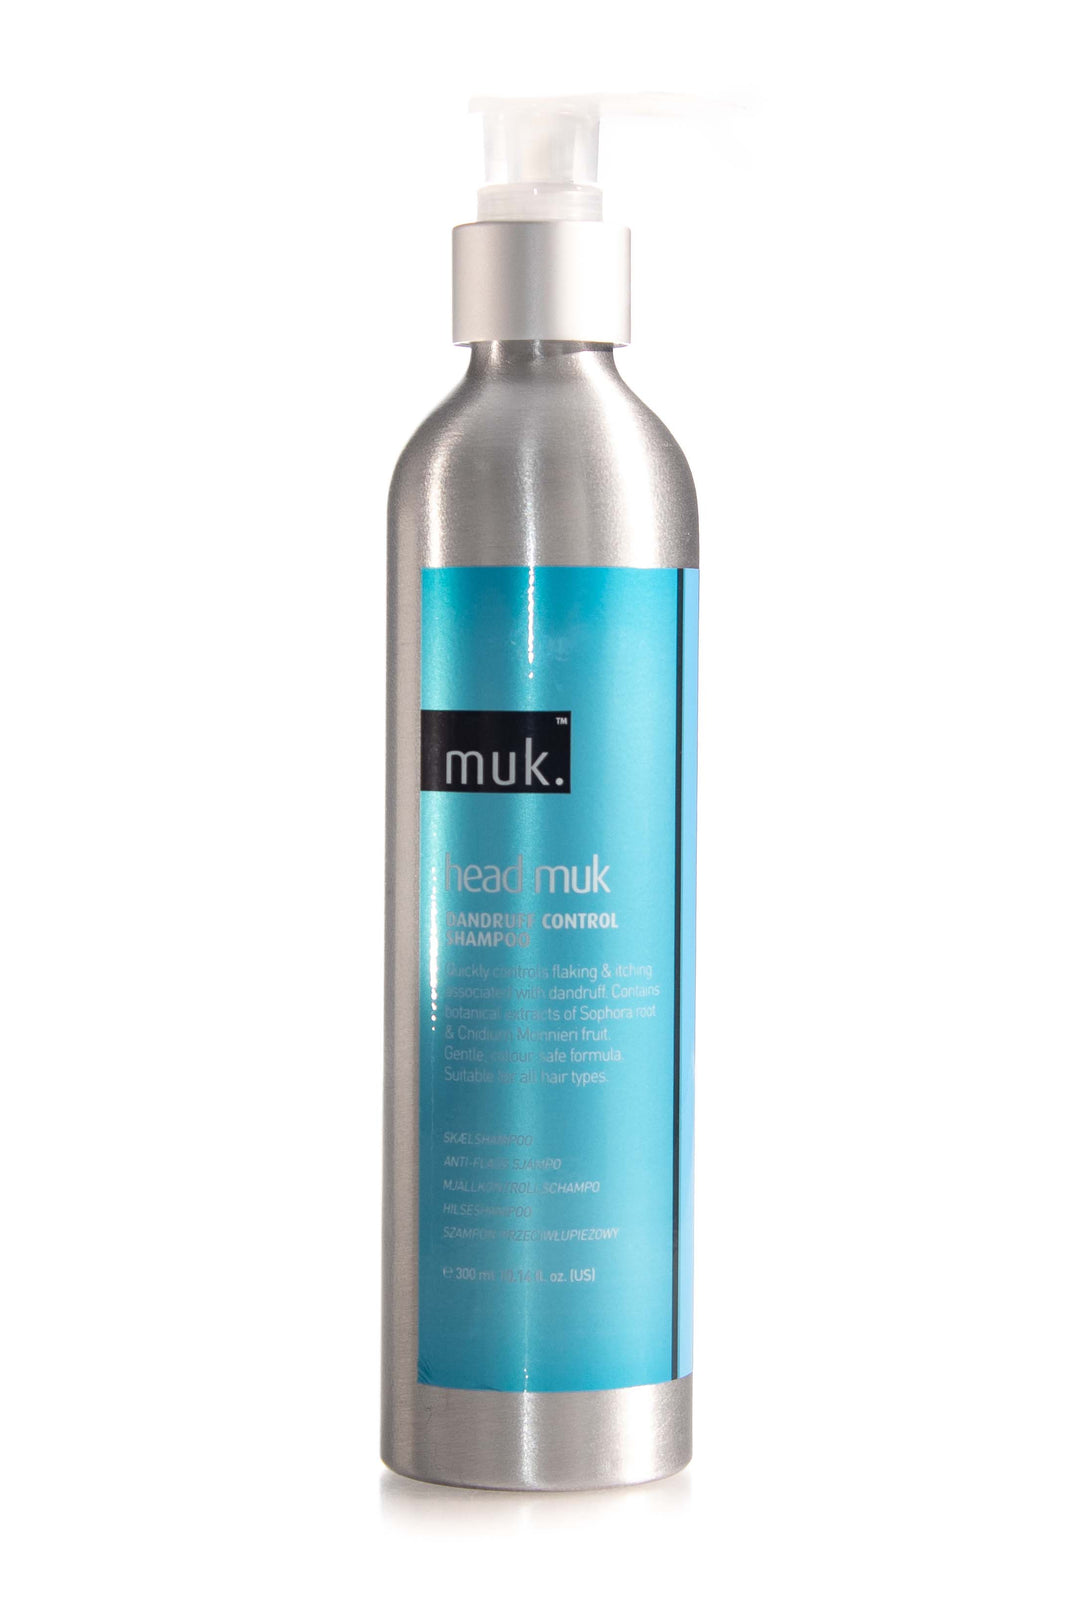 muk-head-muk-dandruff-control-shampoo-300ml